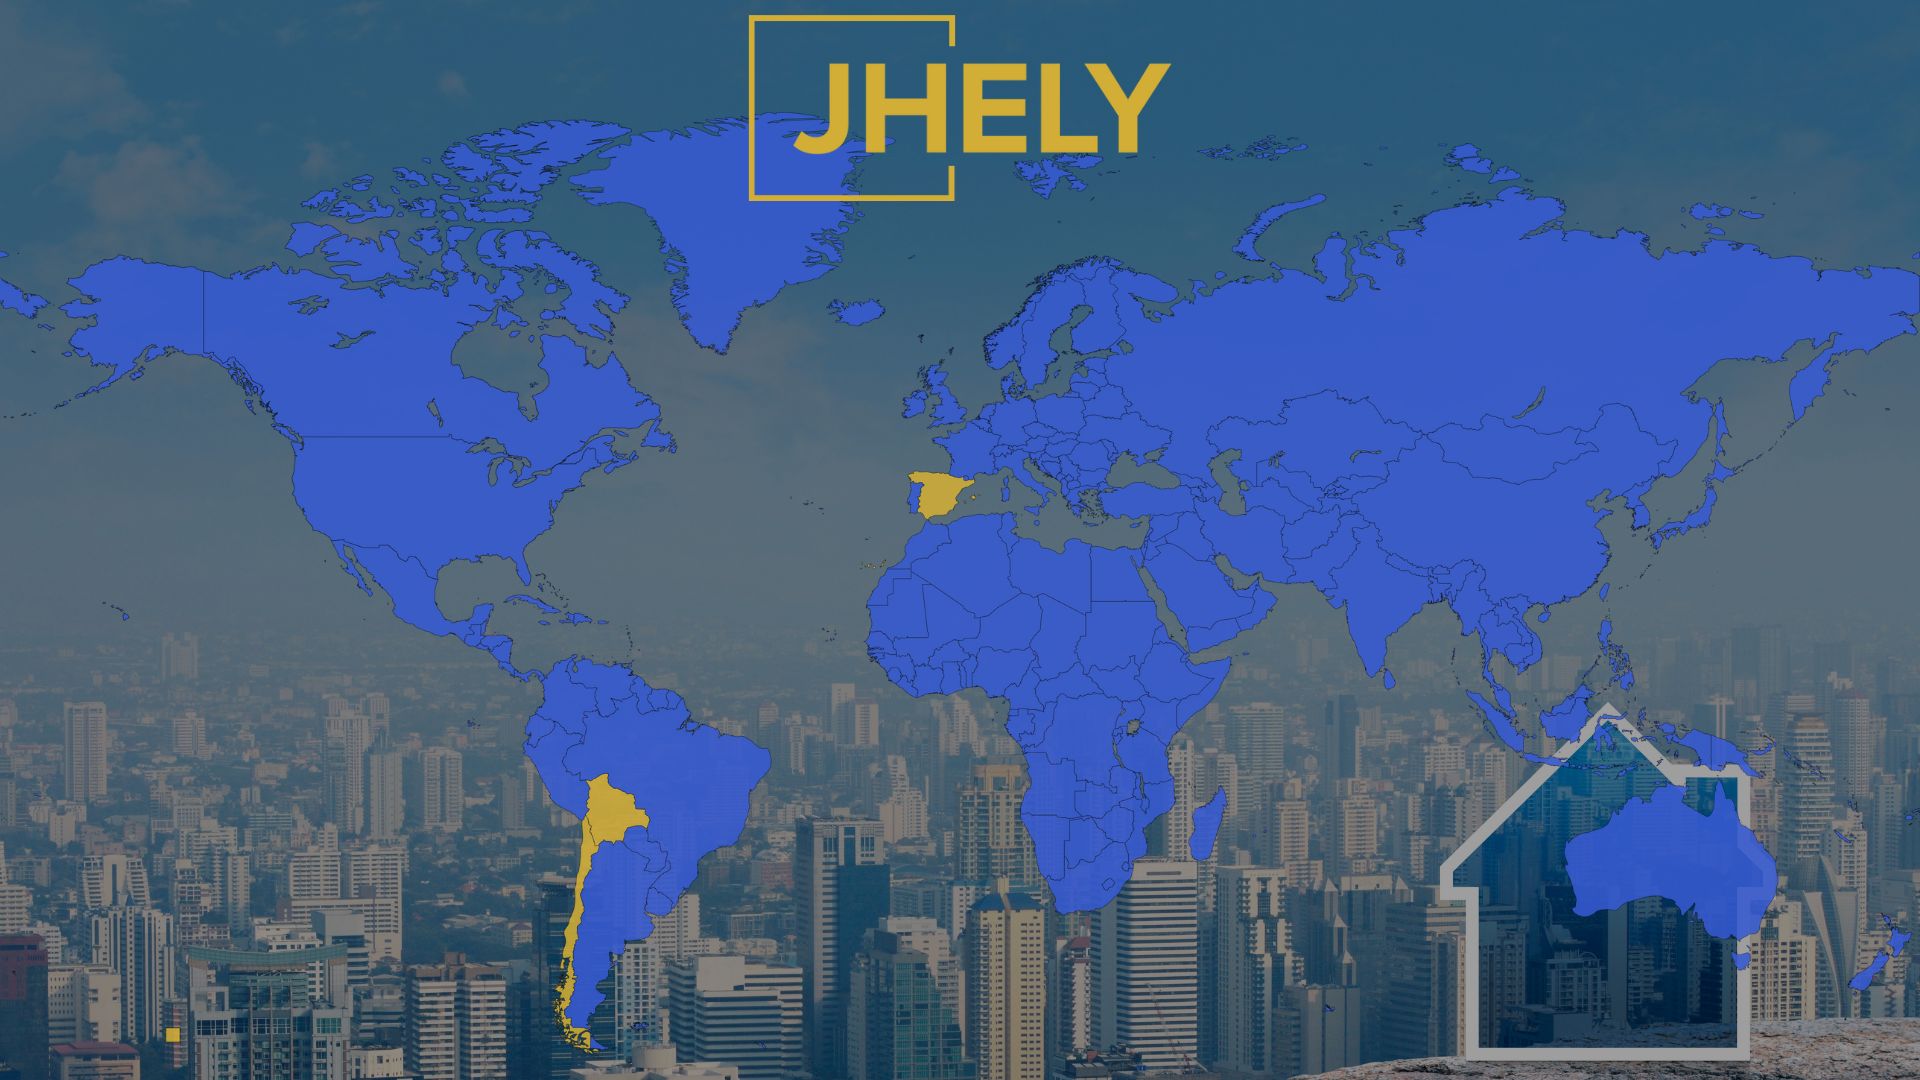 JHELY Global se está expandiendo